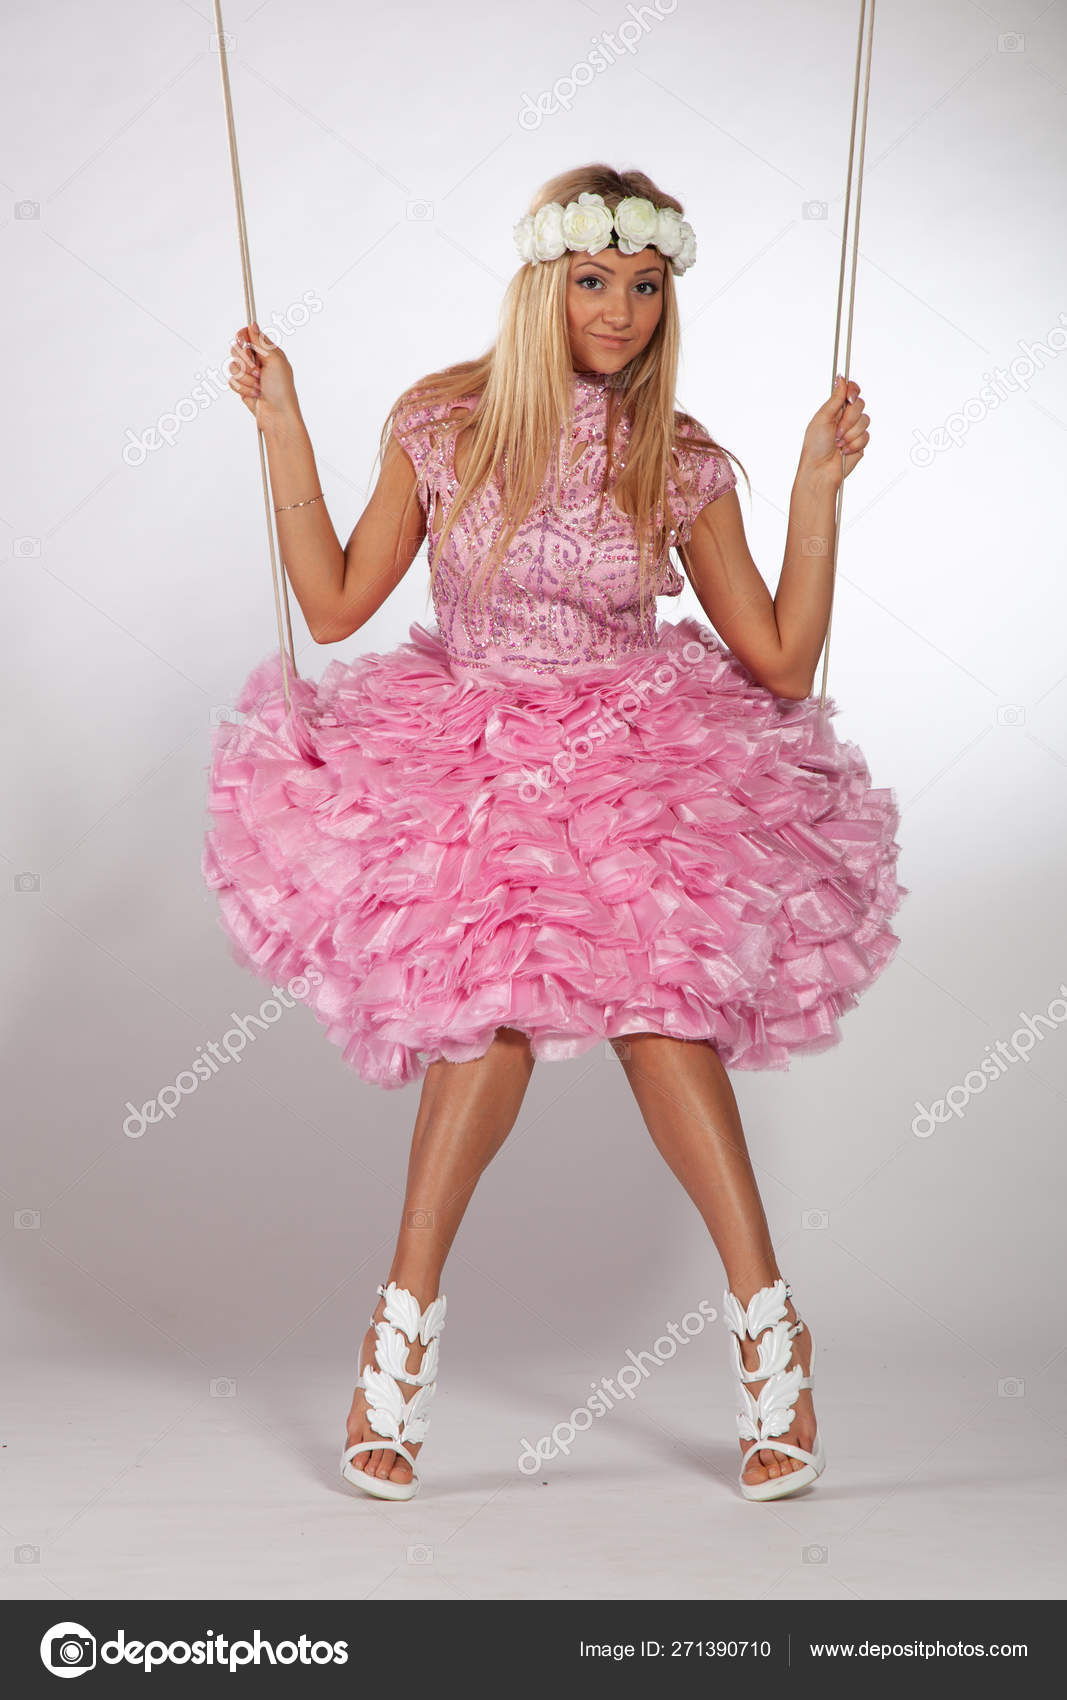 https://st4.depositphotos.com/10086424/27139/i/1600/depositphotos_271390710-stock-photo-girl-swinging-swing-studio-pink.jpg